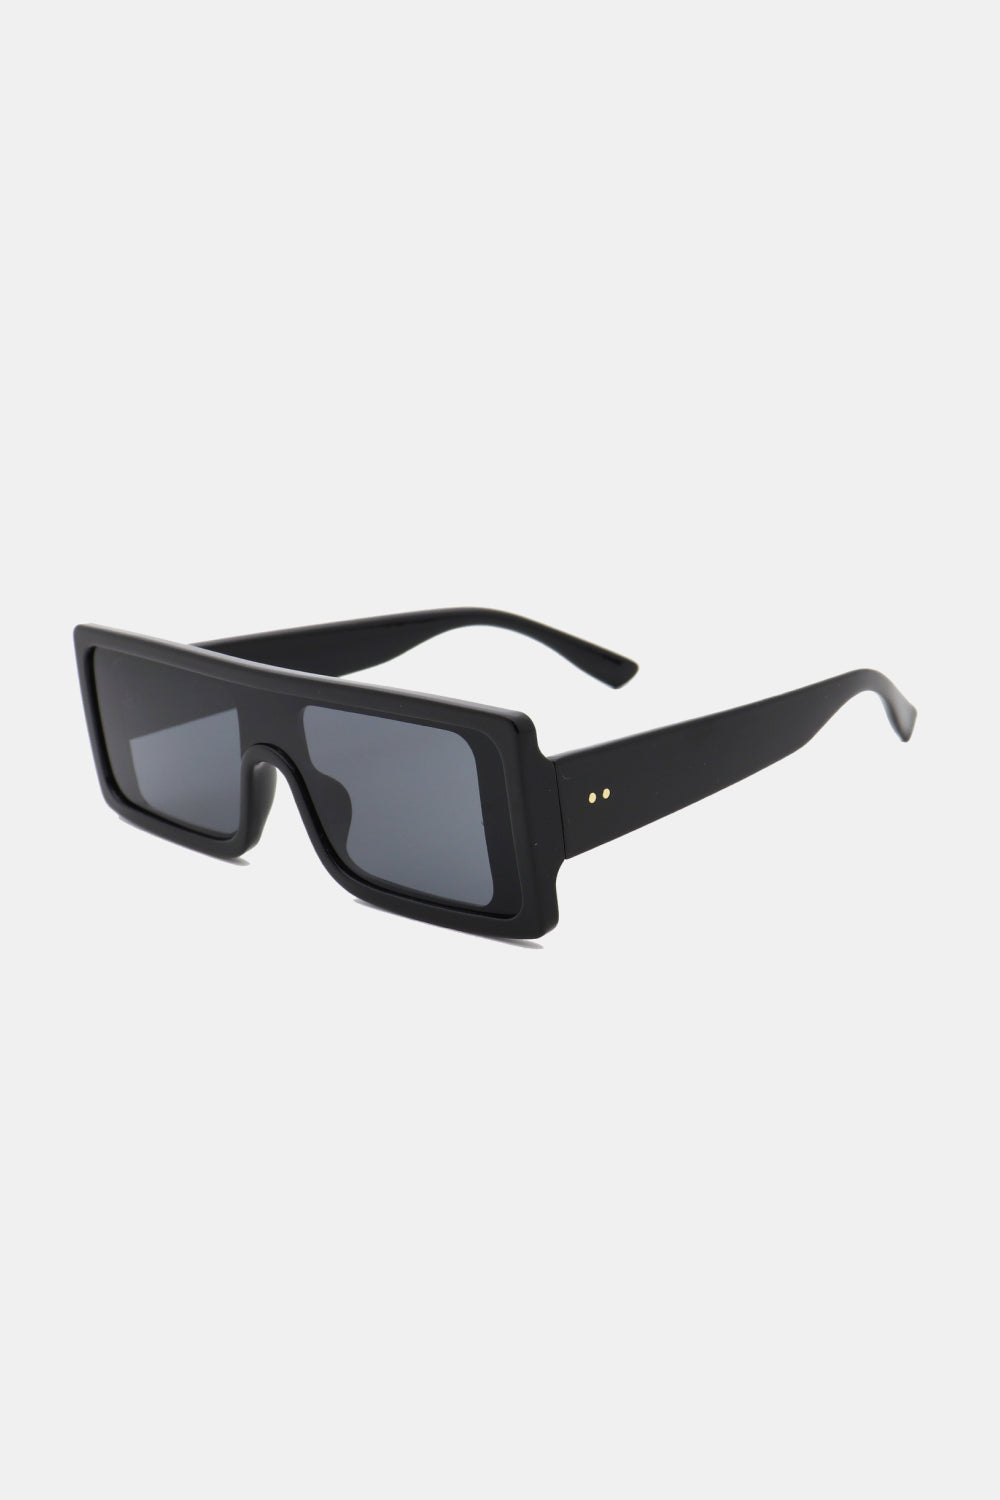 Loyola Sunglasses